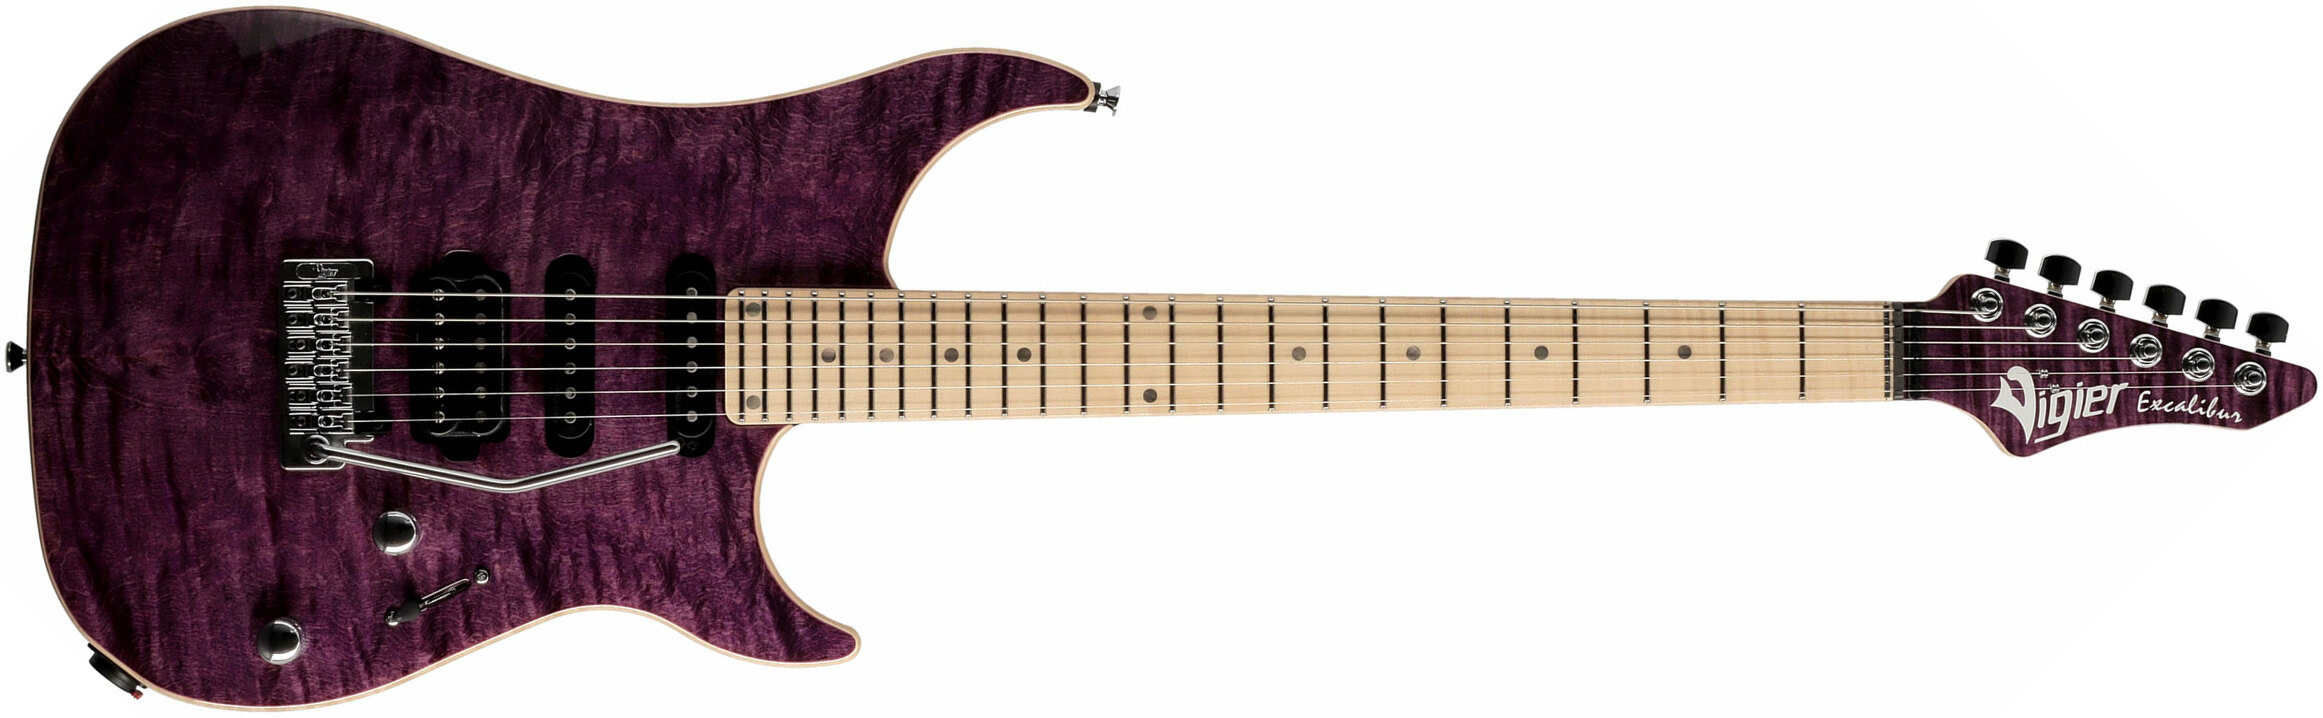 Vigier Excalibur Ultra Blues Hss Trem Mn - Amethyst Purple - E-Gitarre in Str-Form - Main picture